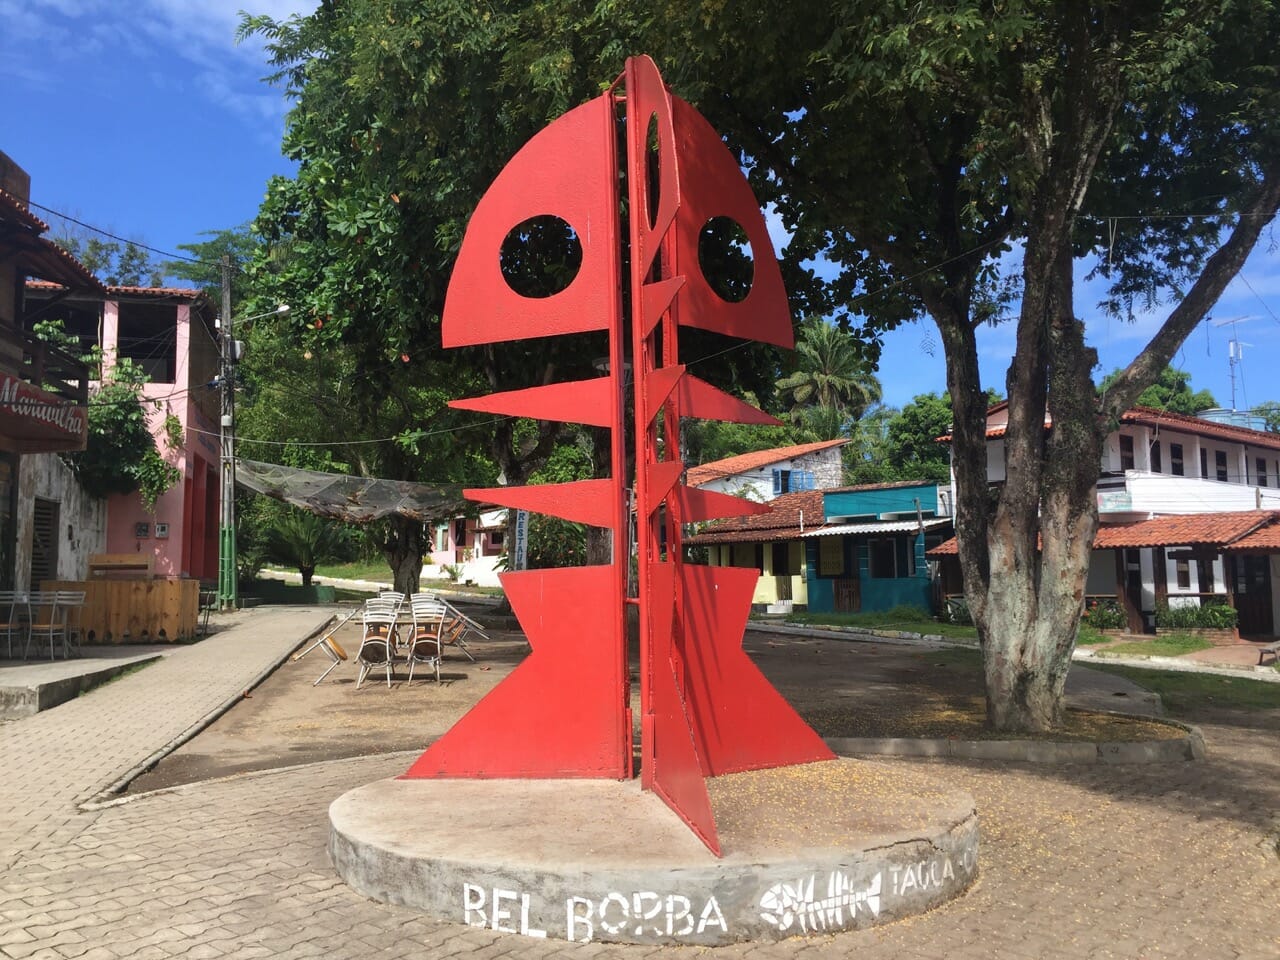 A red fish iron sculpture made by Bel Borba in the centre of the village of Velha Boipeba, on Boipeba Island, Bahia, Brazil